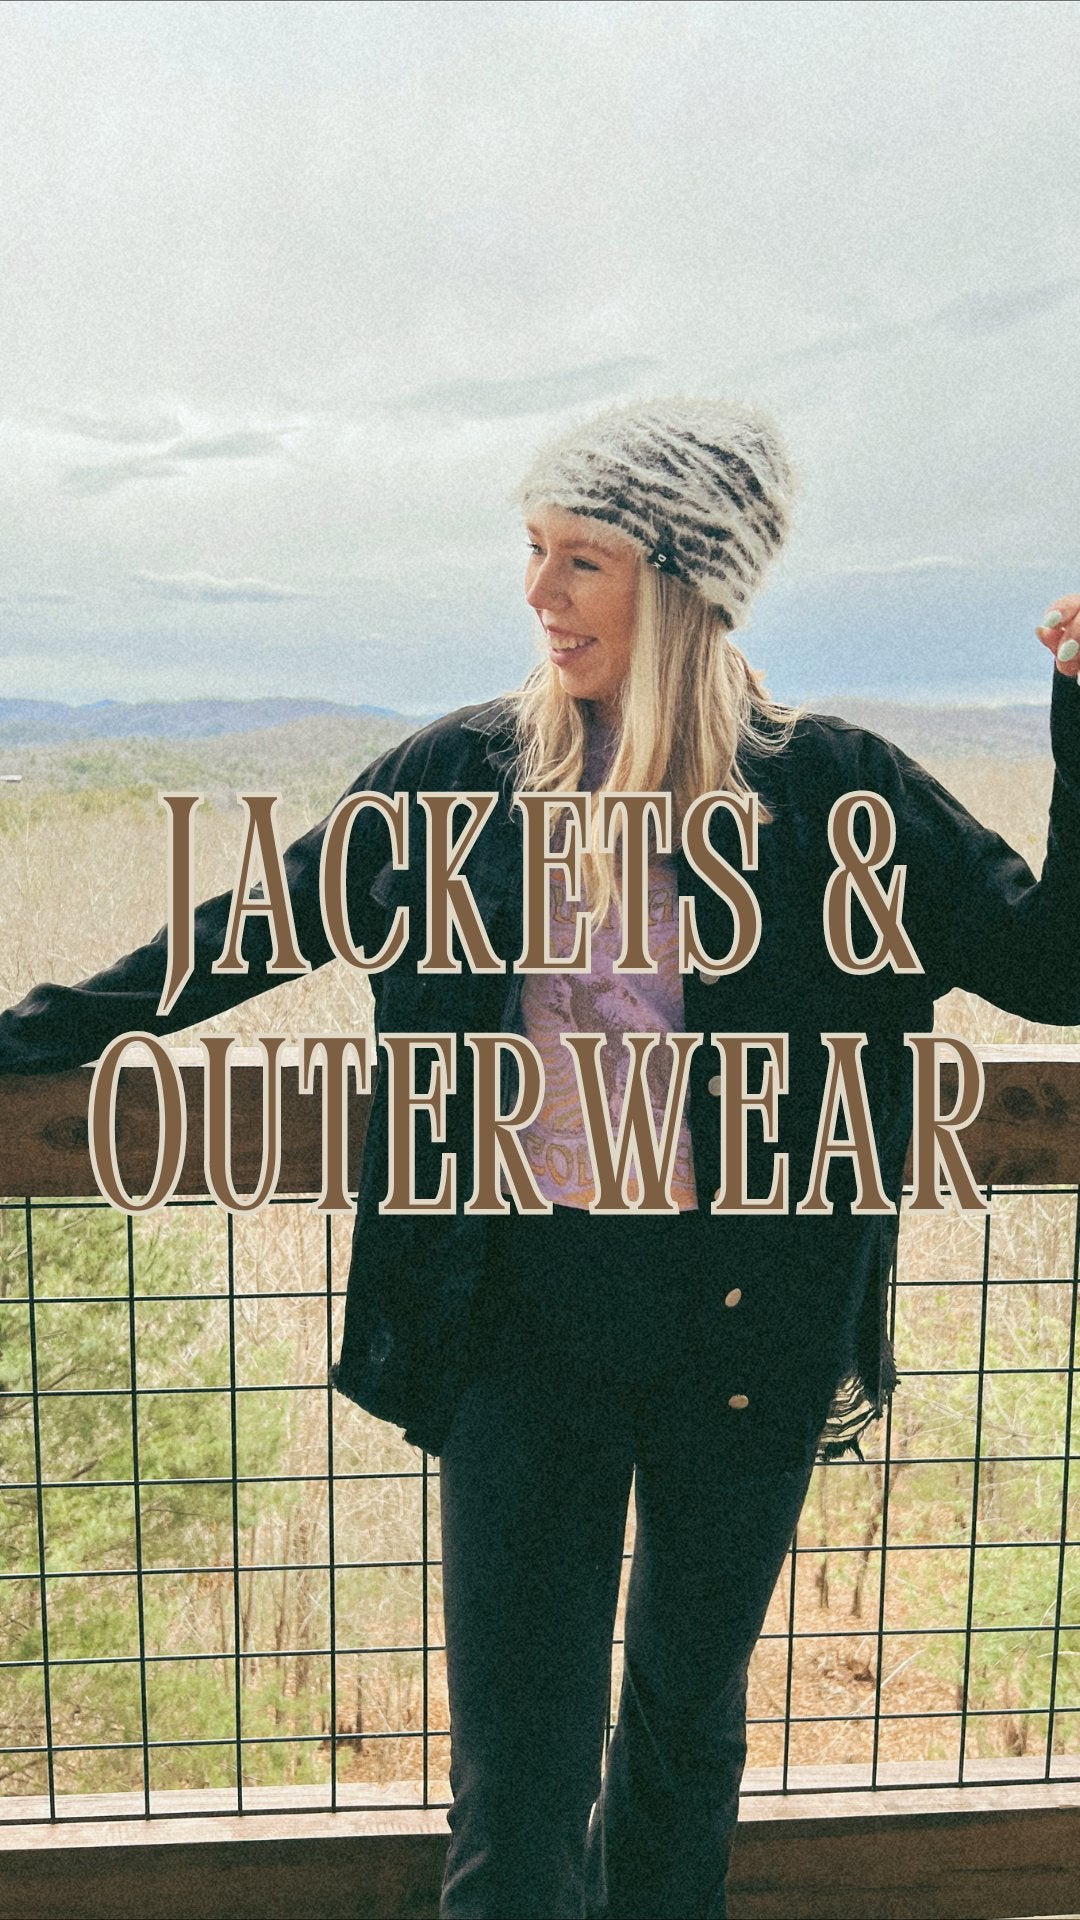 JACKETS + OUTERWEAR